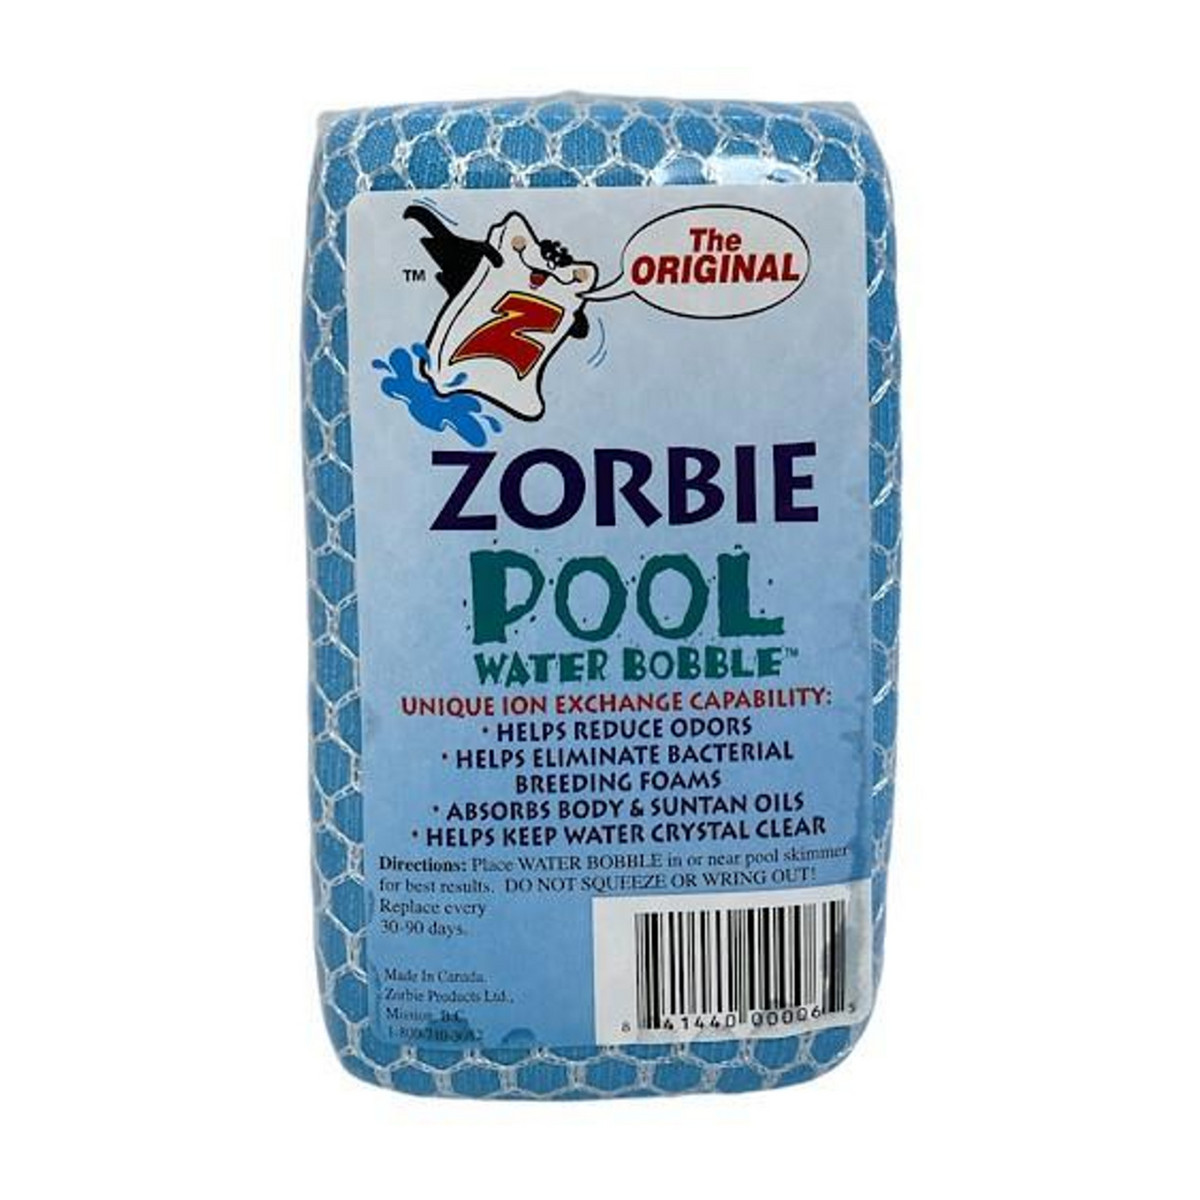 Zorbie Pool Water Bobble™️ - Removes Pool Contaminants